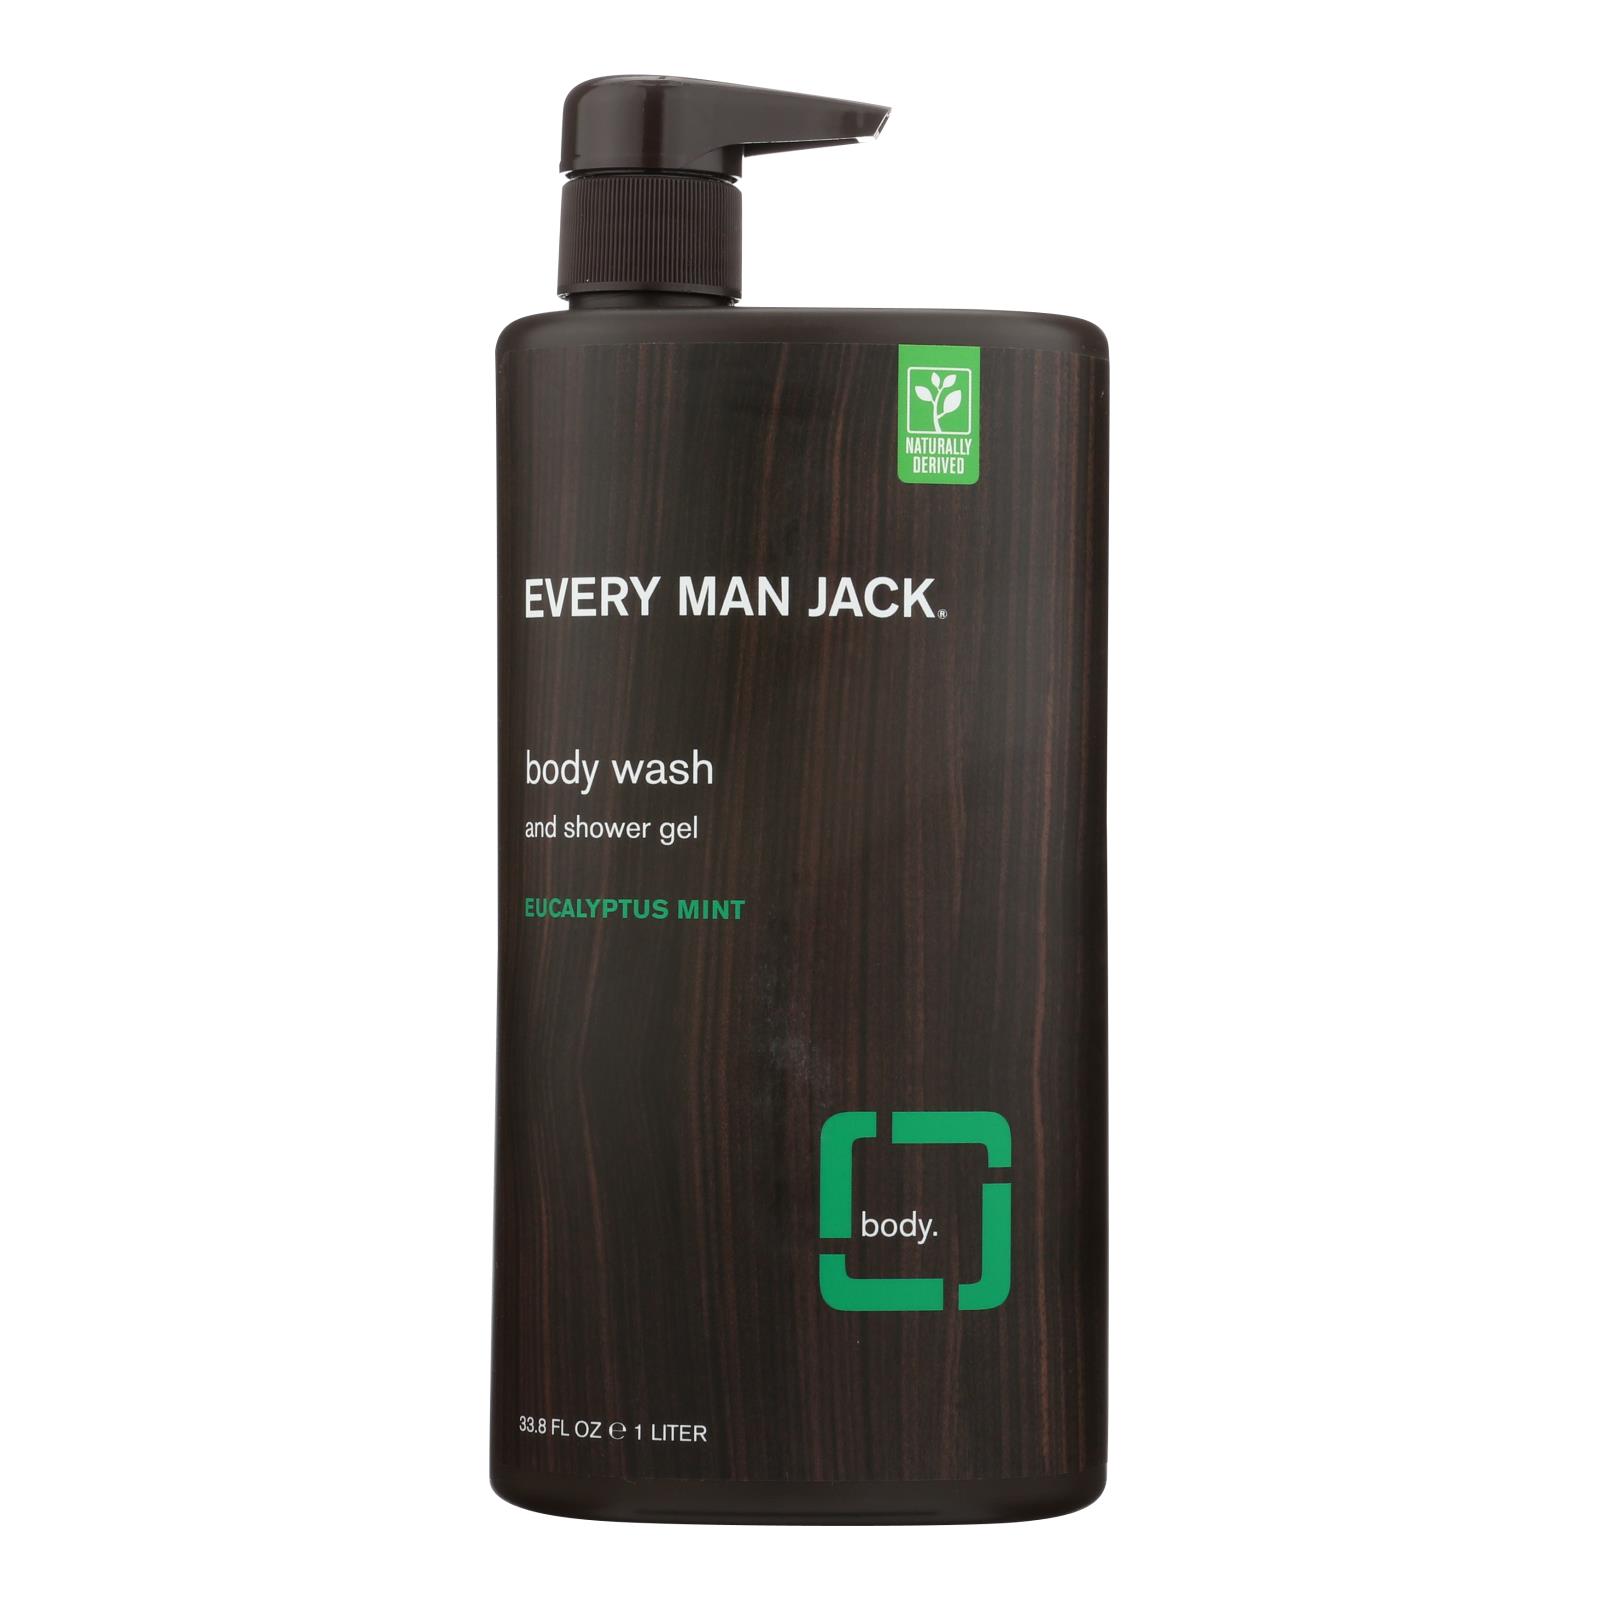 Every Man Jack Body Wash Eucalyptus Mint Body Wash - 1 Each - 33.8 fl oz.